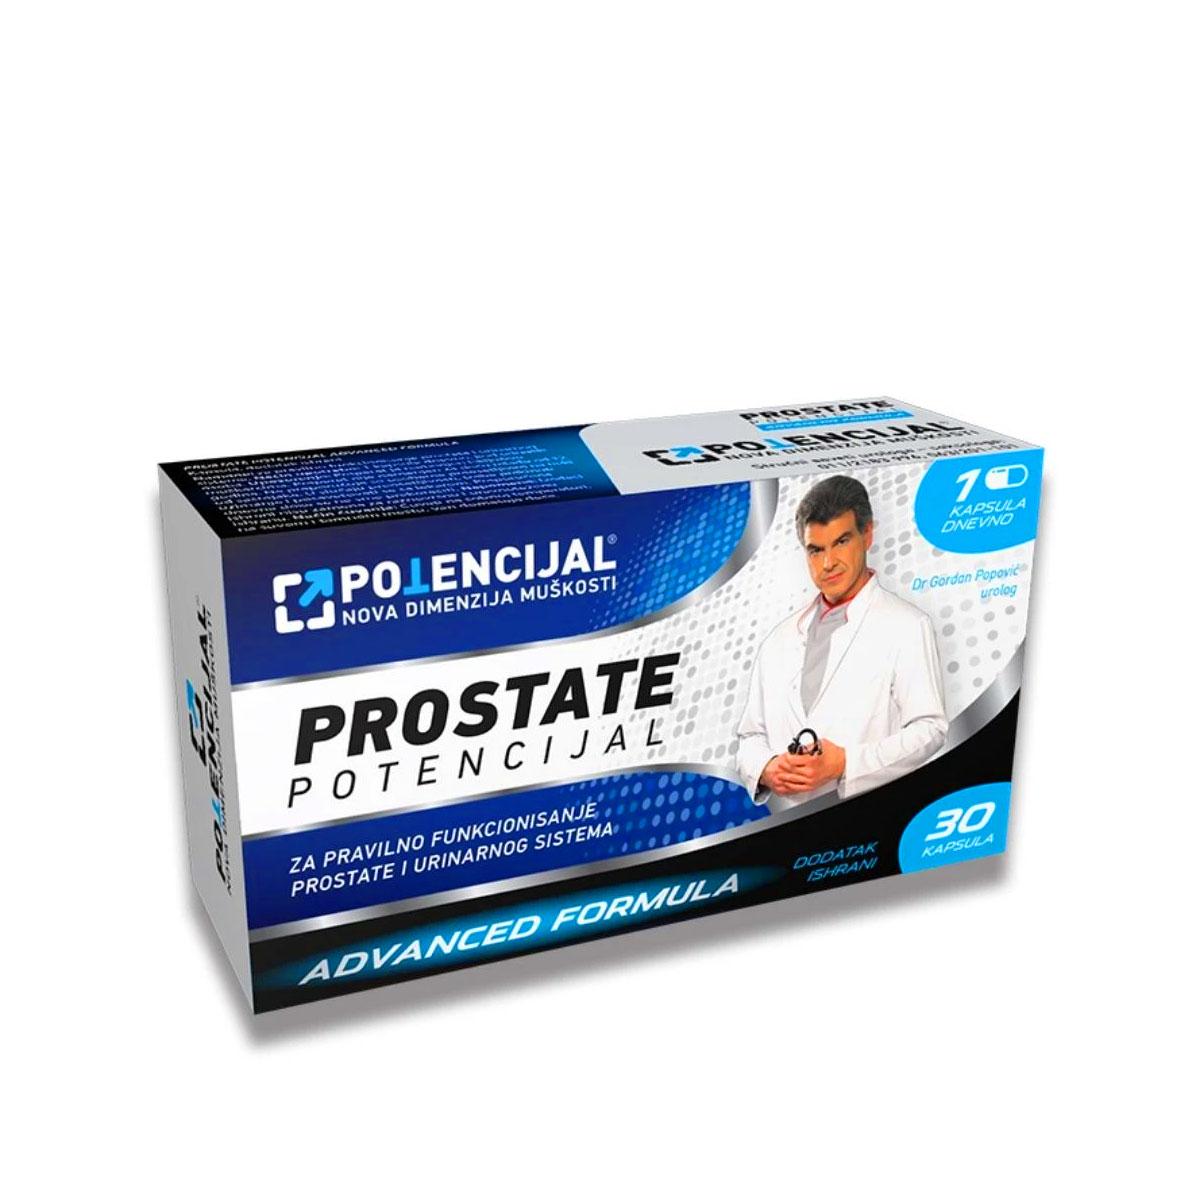 Selected image for POTENCIJAL Prostate Advance formula 30/1